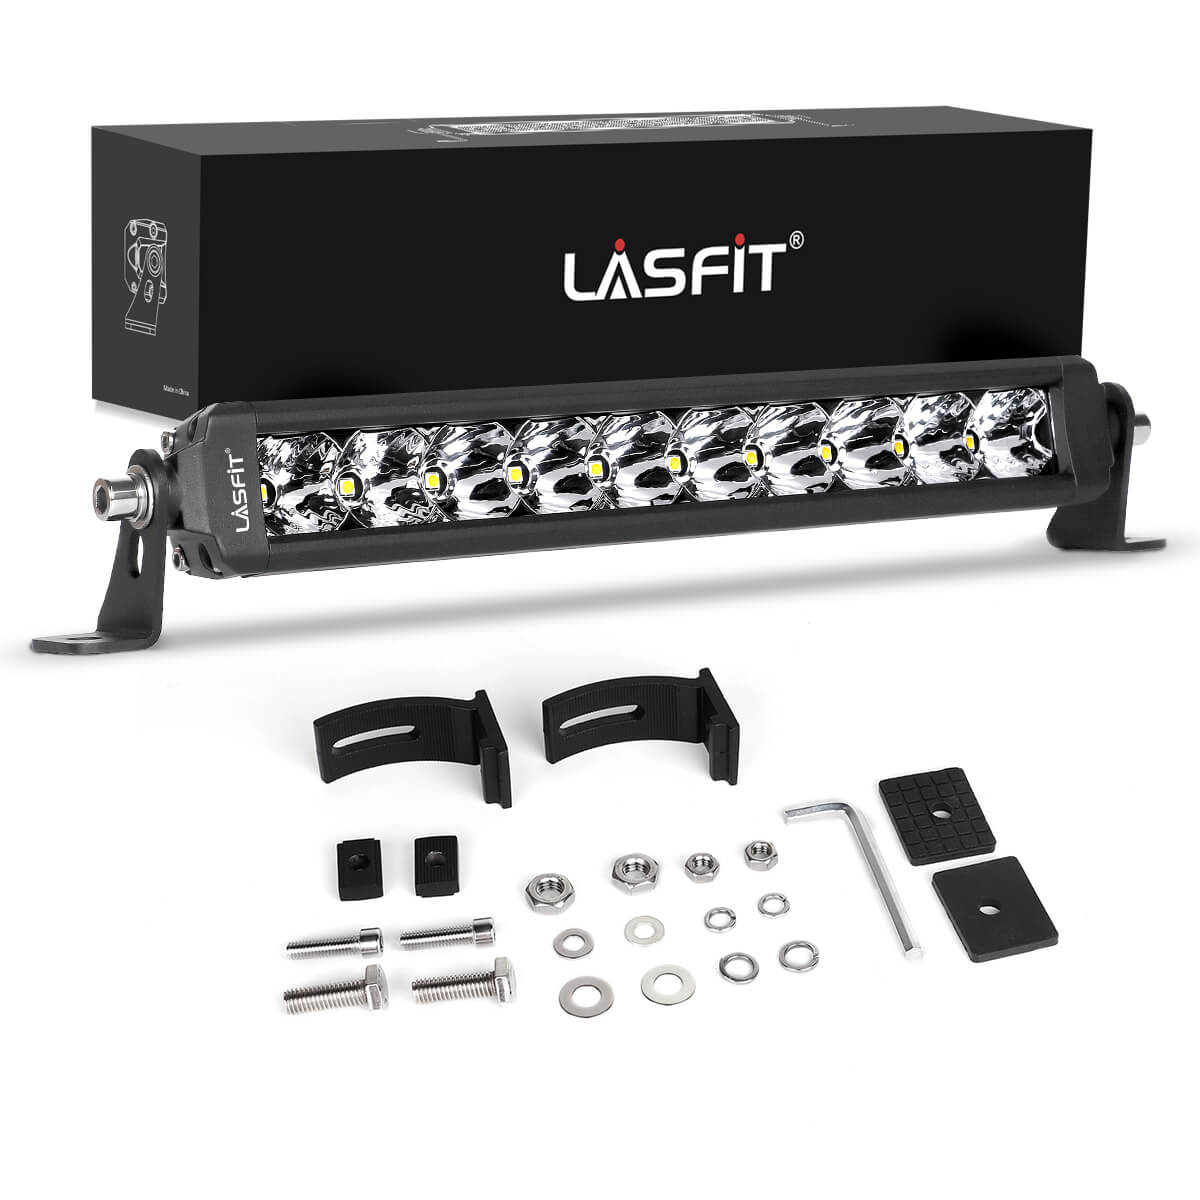 LASFIT Off-Road LED Light Bars 12 22 32 42 52 Inch Spot Flood Combo Si